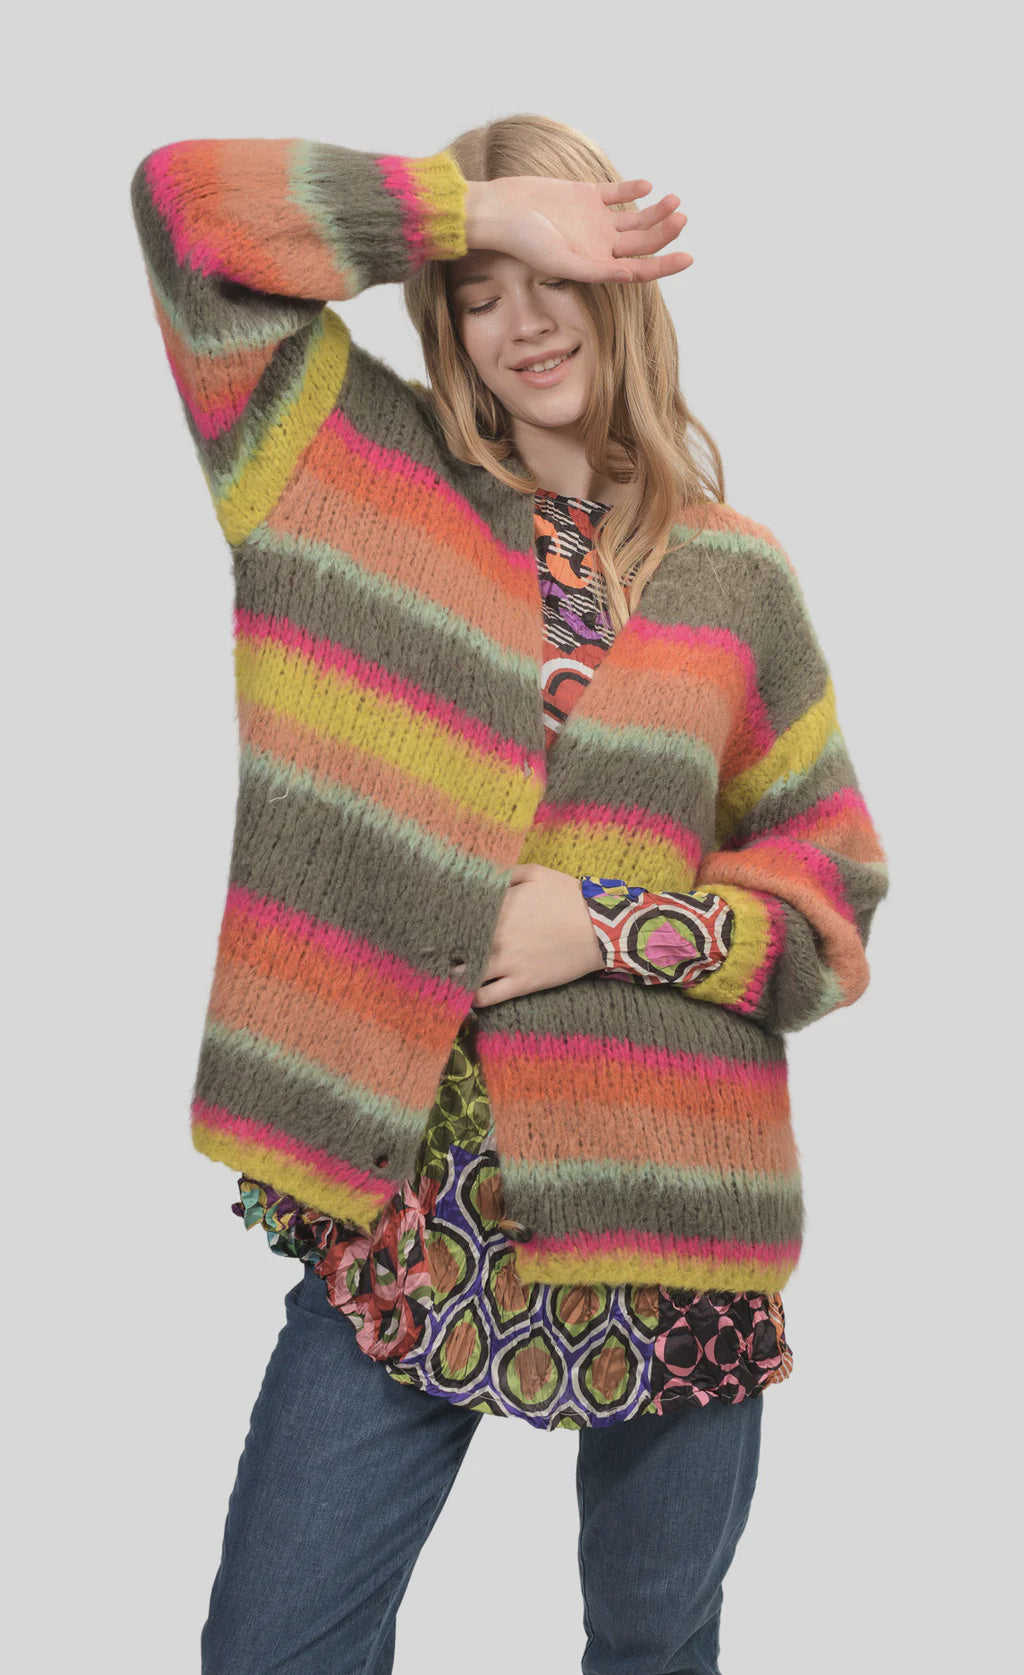 Alembika Stripes Sweater